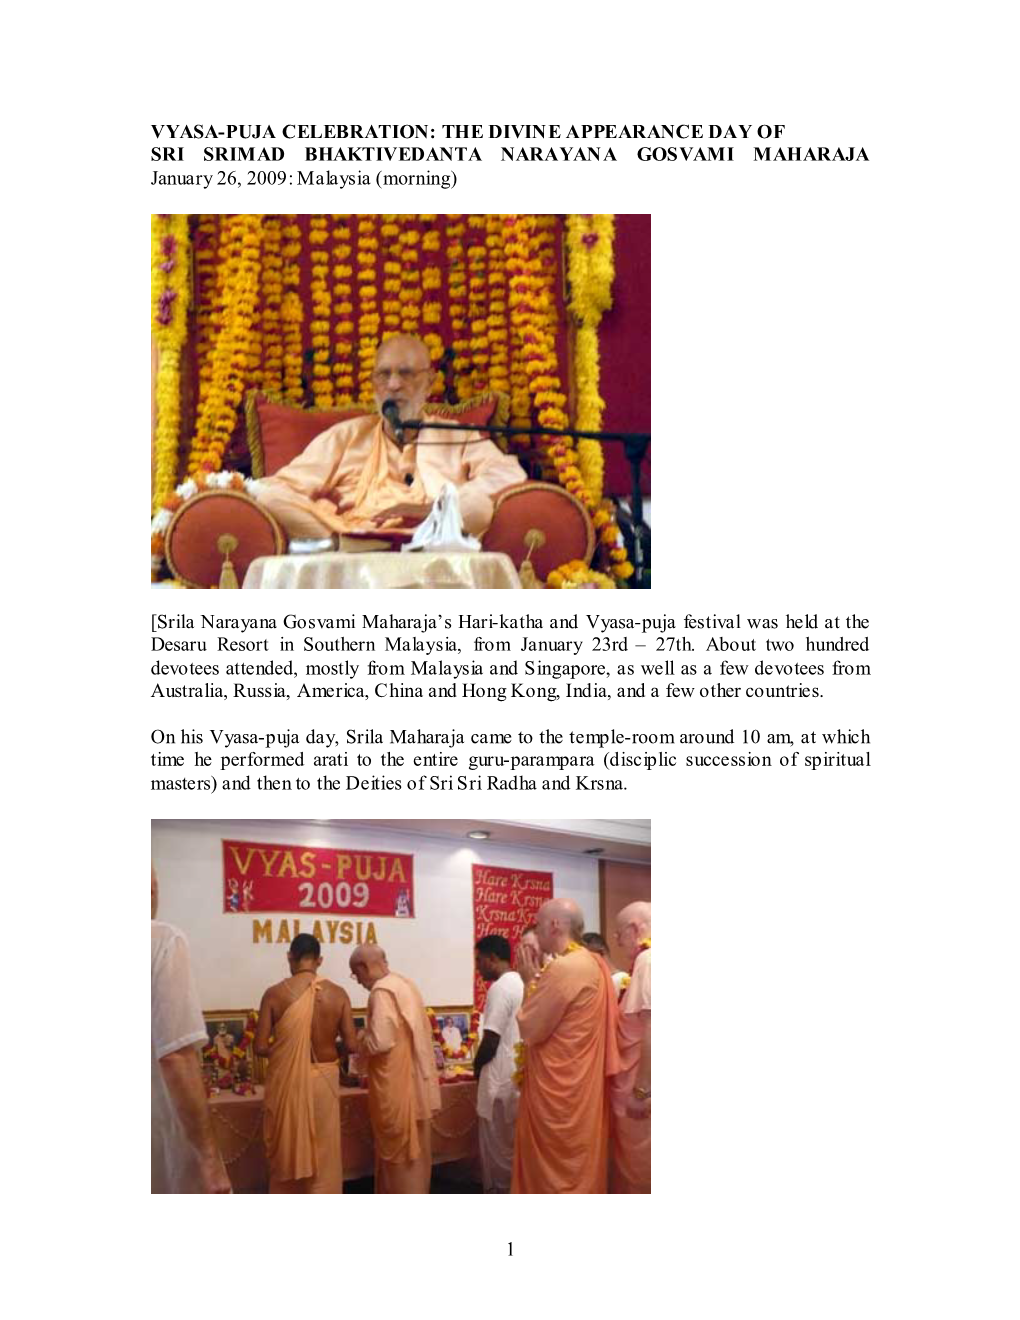 Tridandisvami Sri Srimad Bhaktivedanta Narayana Gosvami